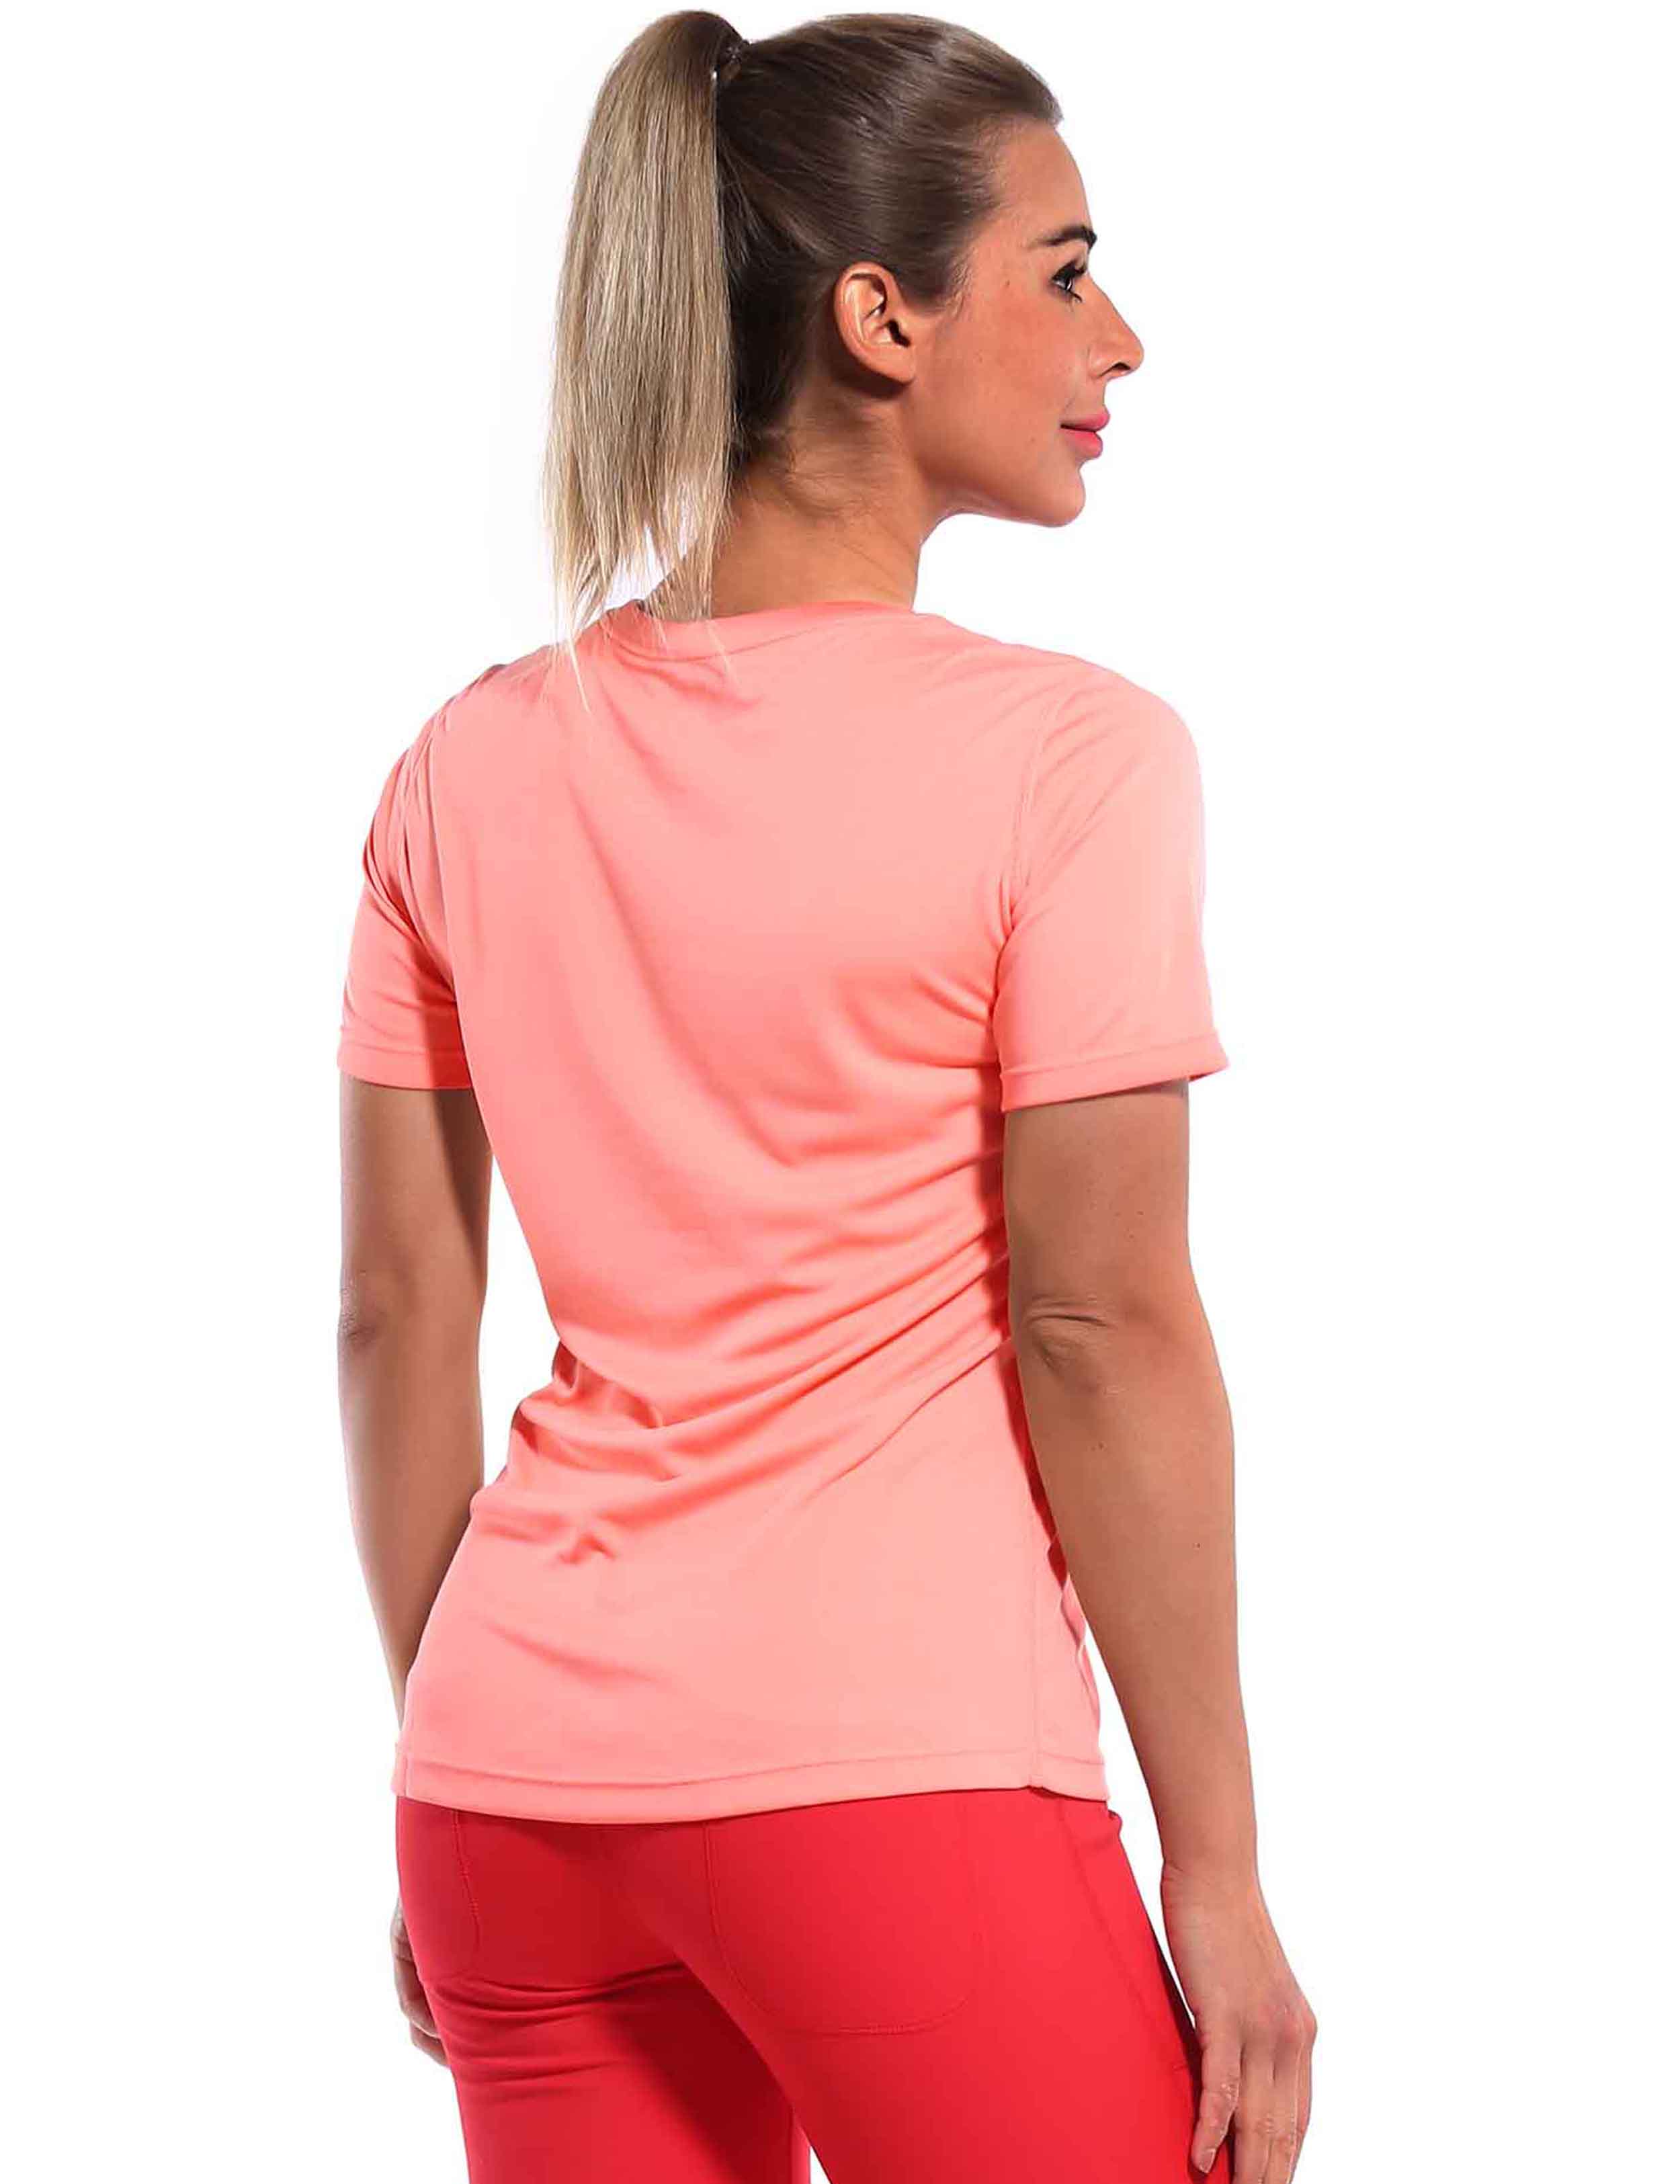 Short Sleeve Athletic Shirts coral_Jogging